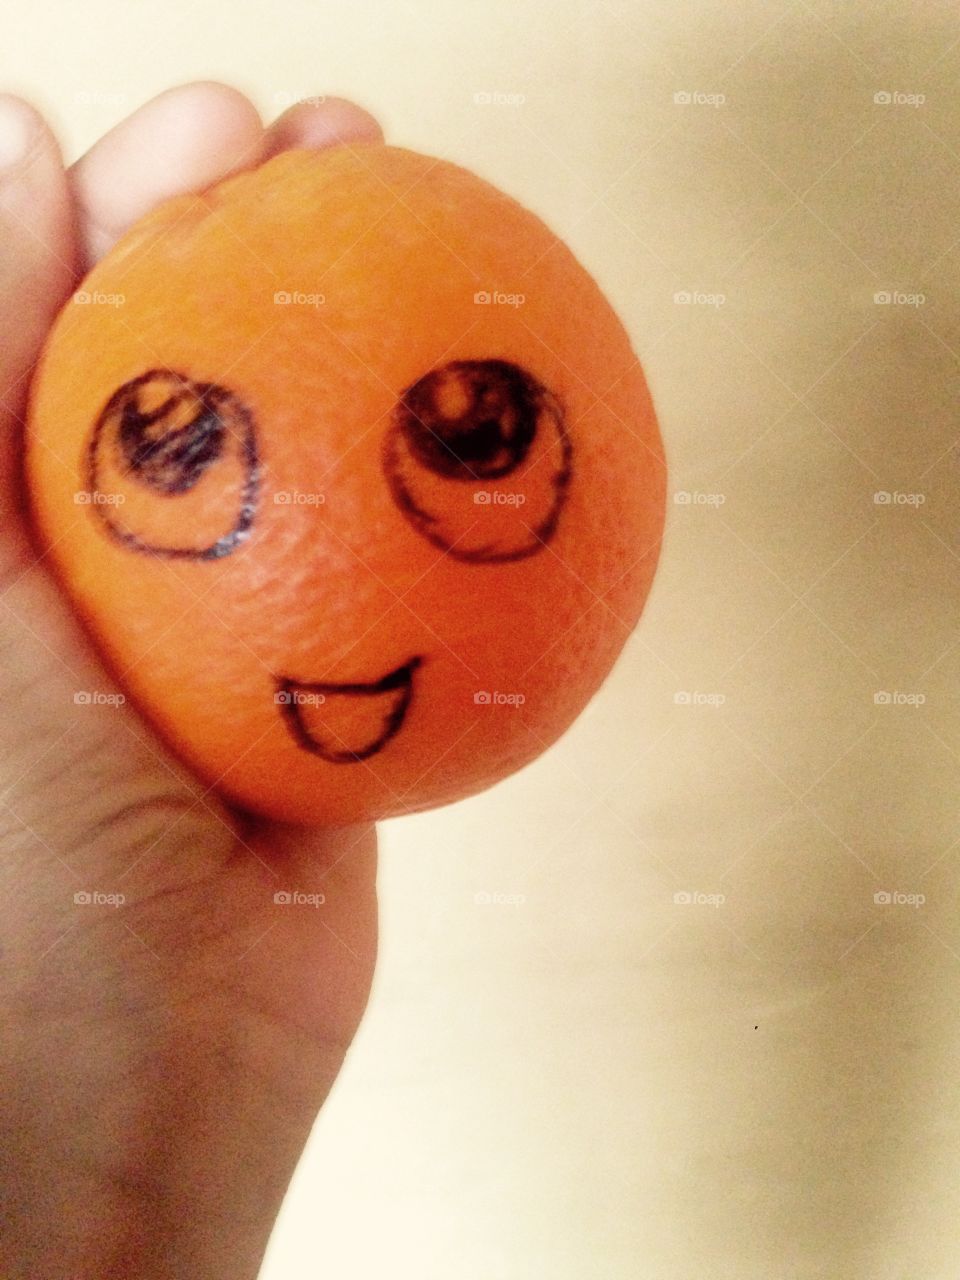 mr.orange